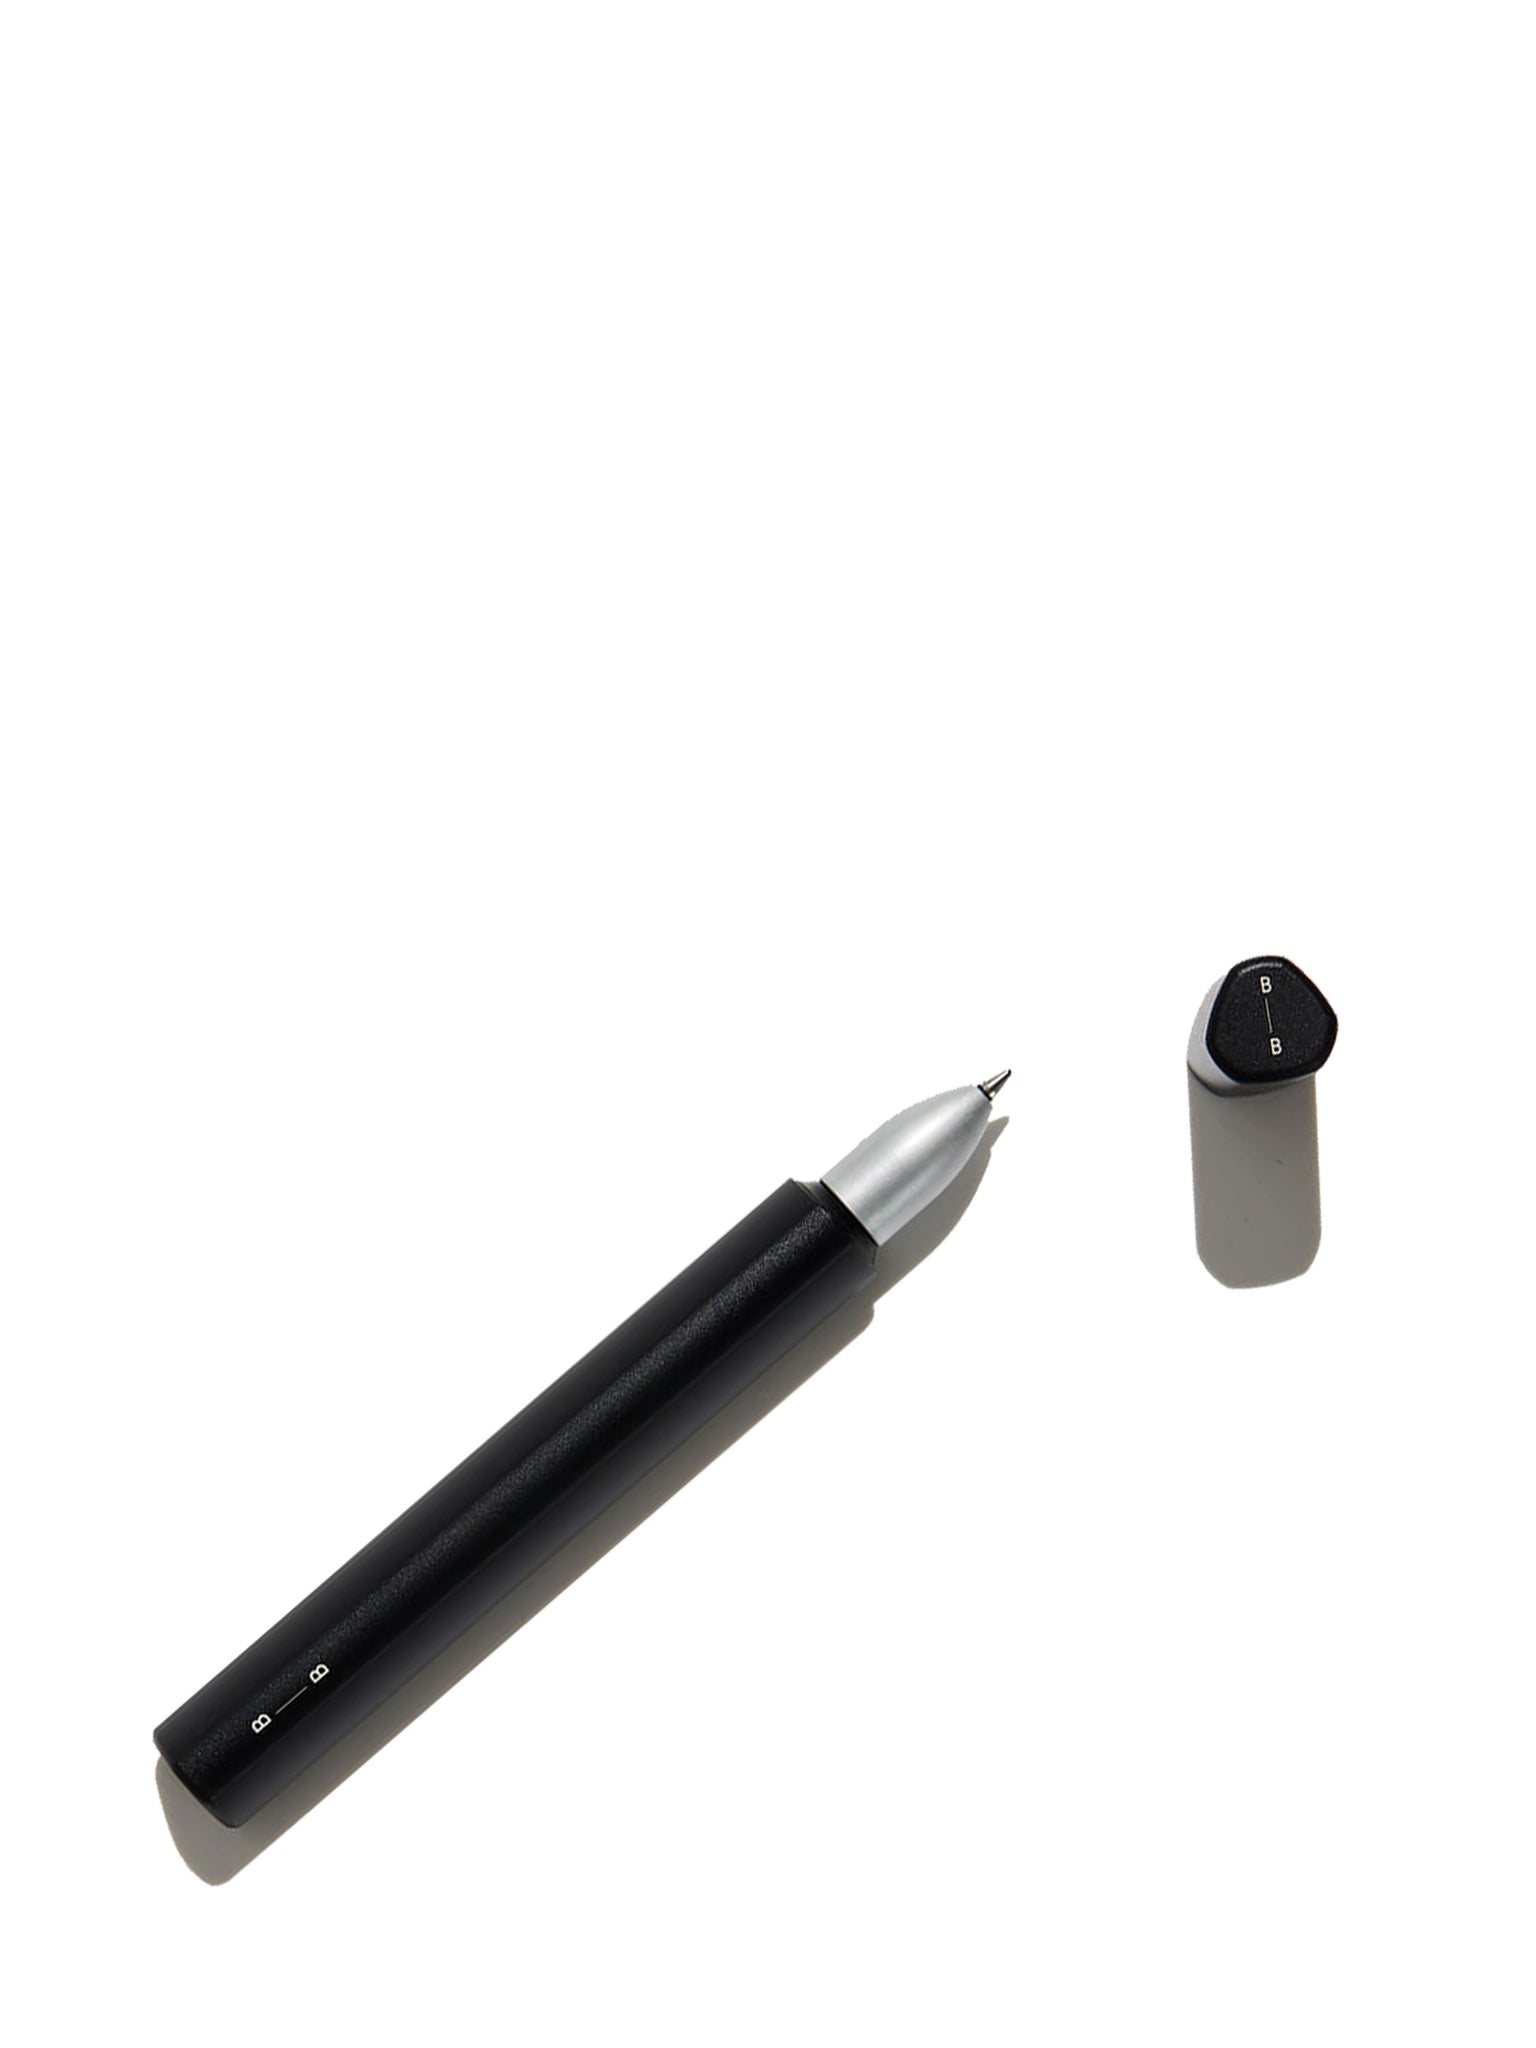 Before breakfast premium rollball pen in black aluminium finish with hand embossed box